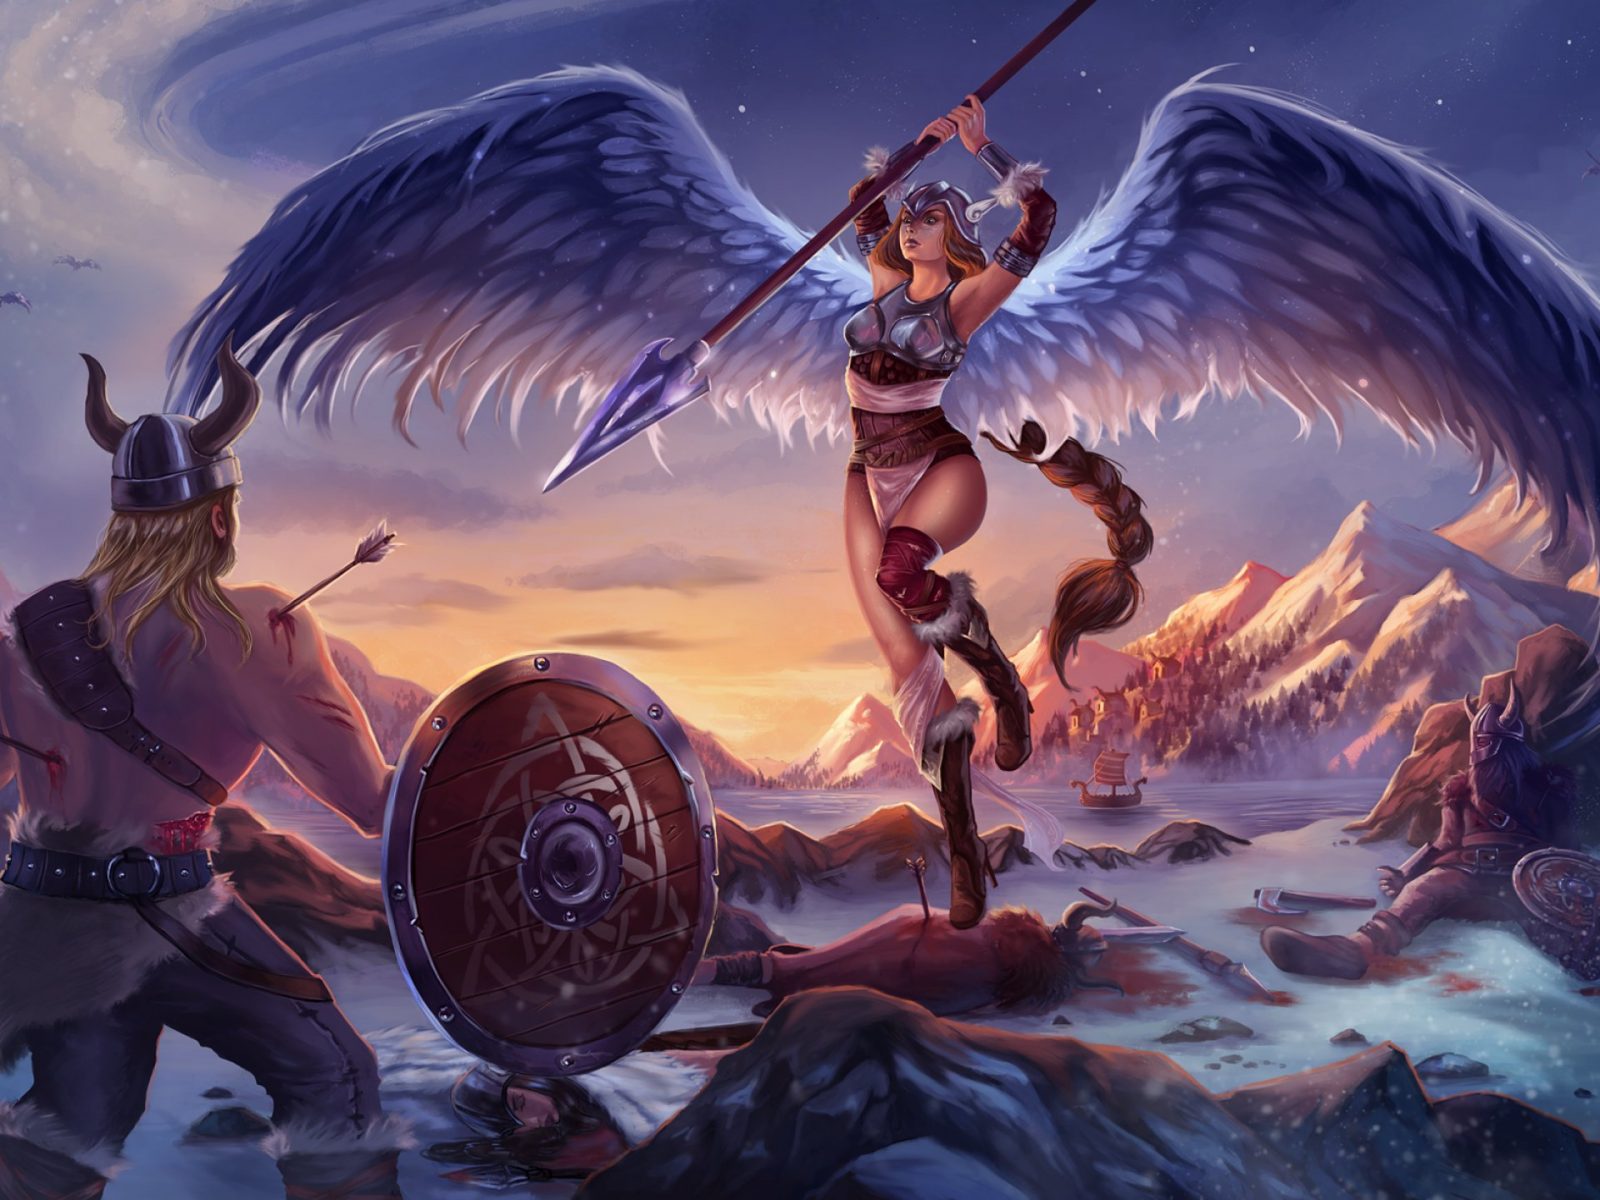 Viking And Girl Fantasy Angel Warrior Battle Art Artwork Art Wallpaper HD 2560x1440, Wallpaper13.com